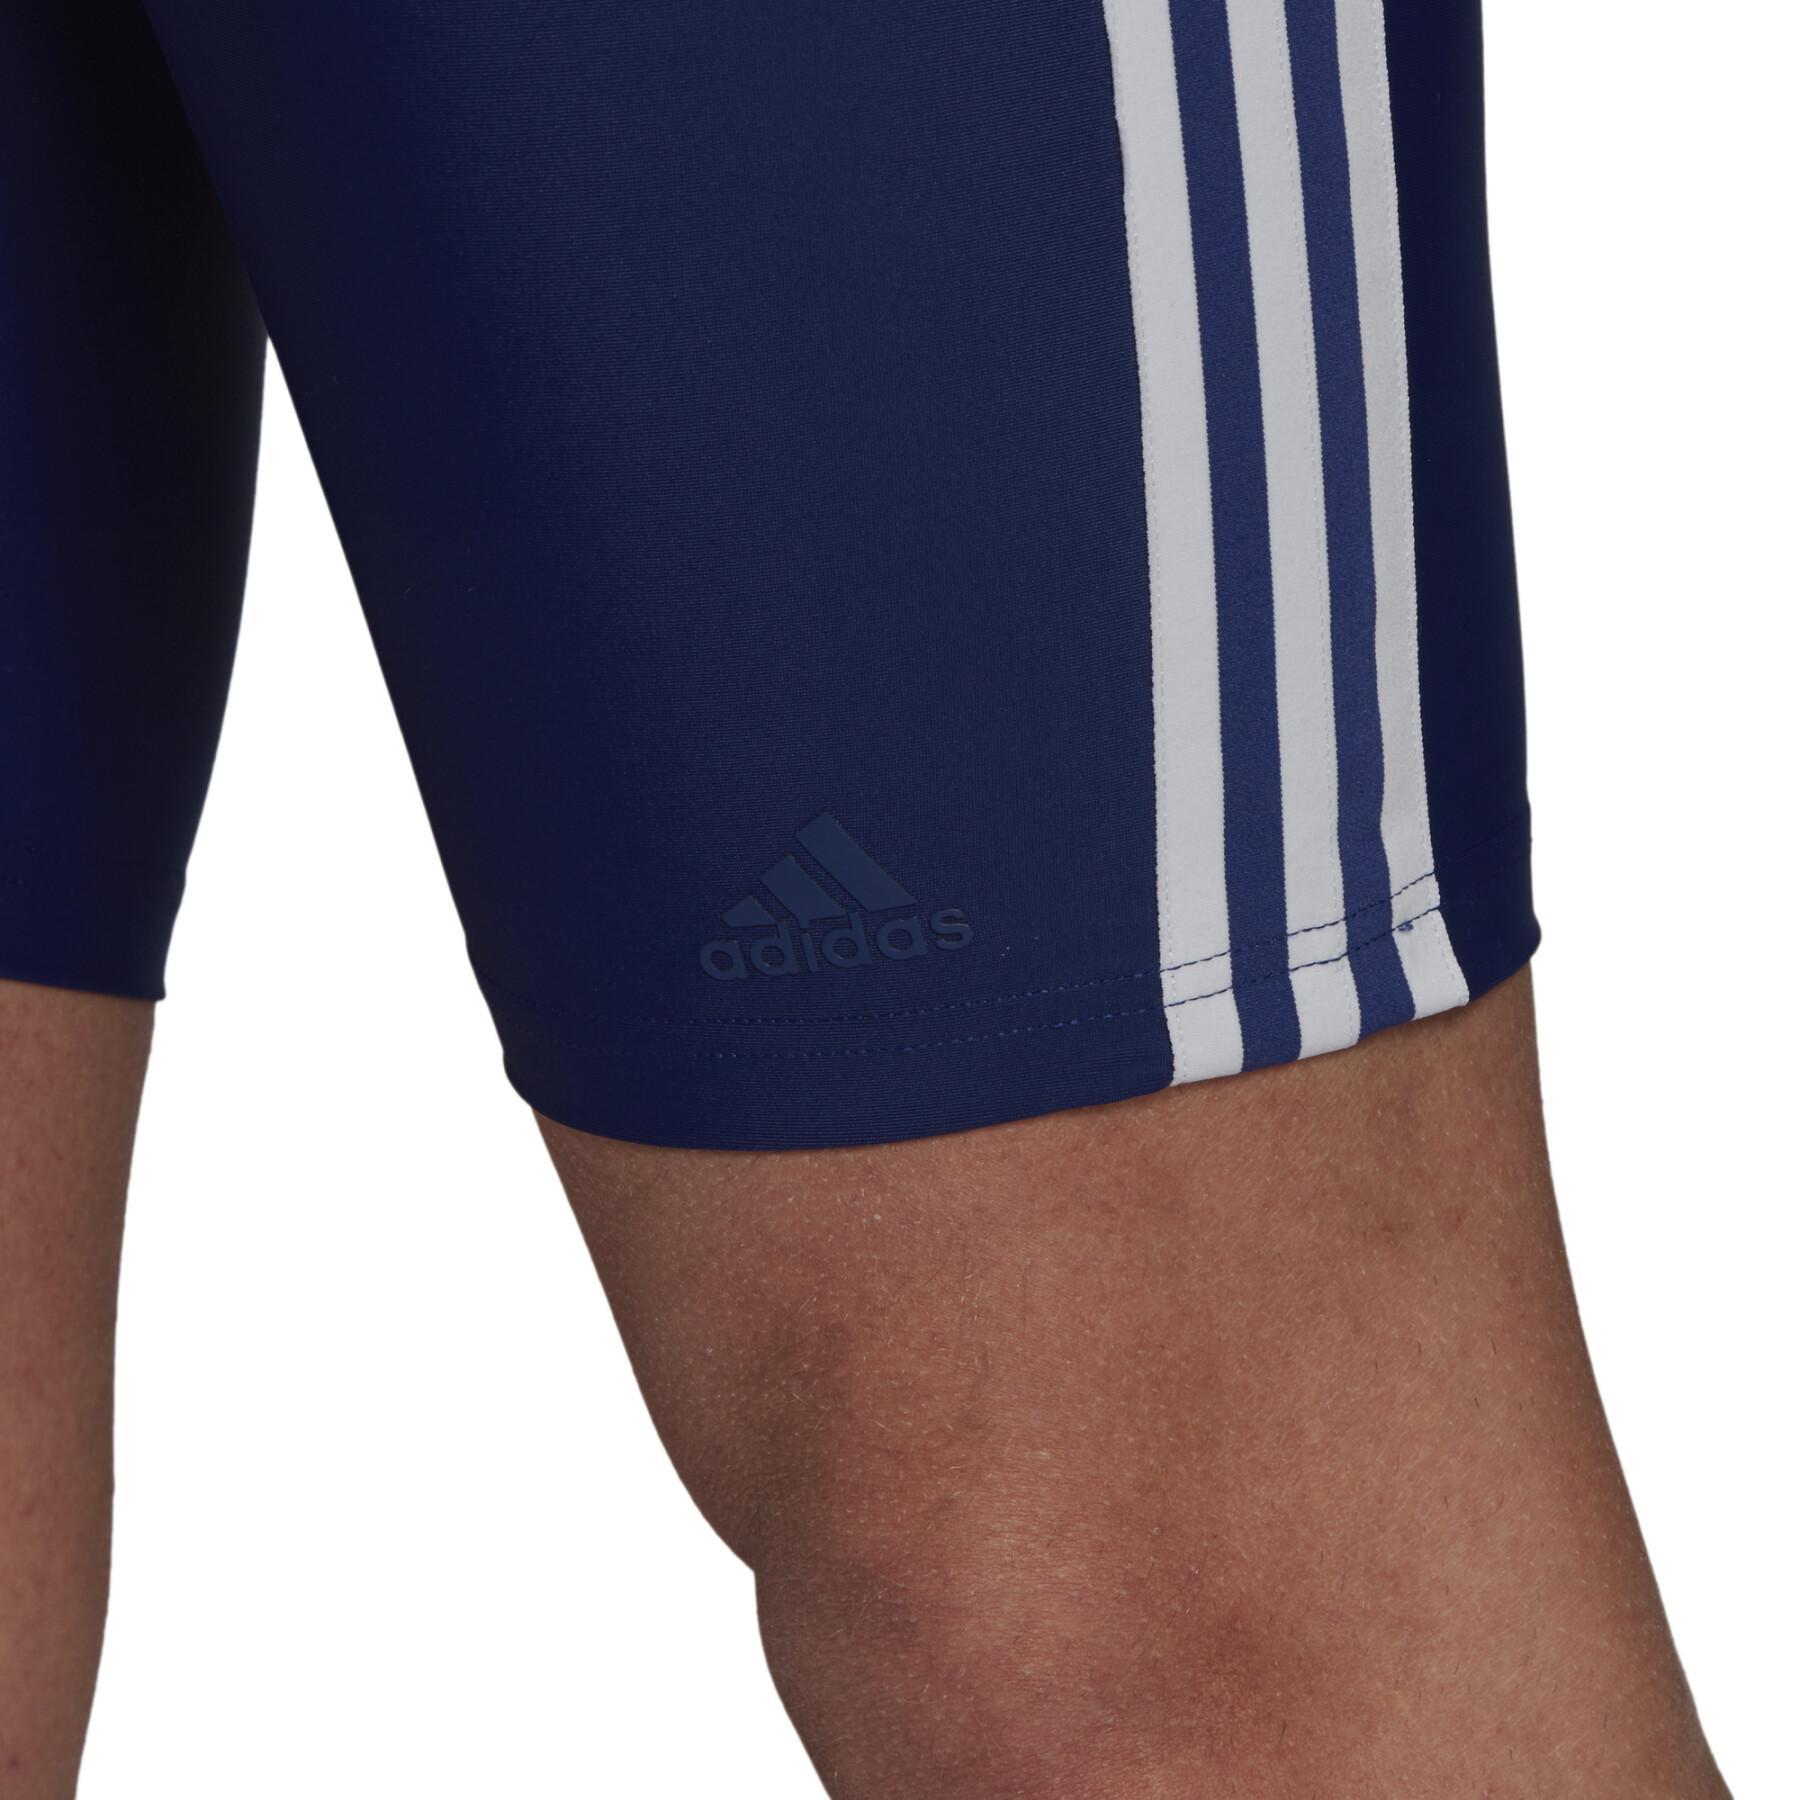 Jammer pływacki adidas 3-Stripes